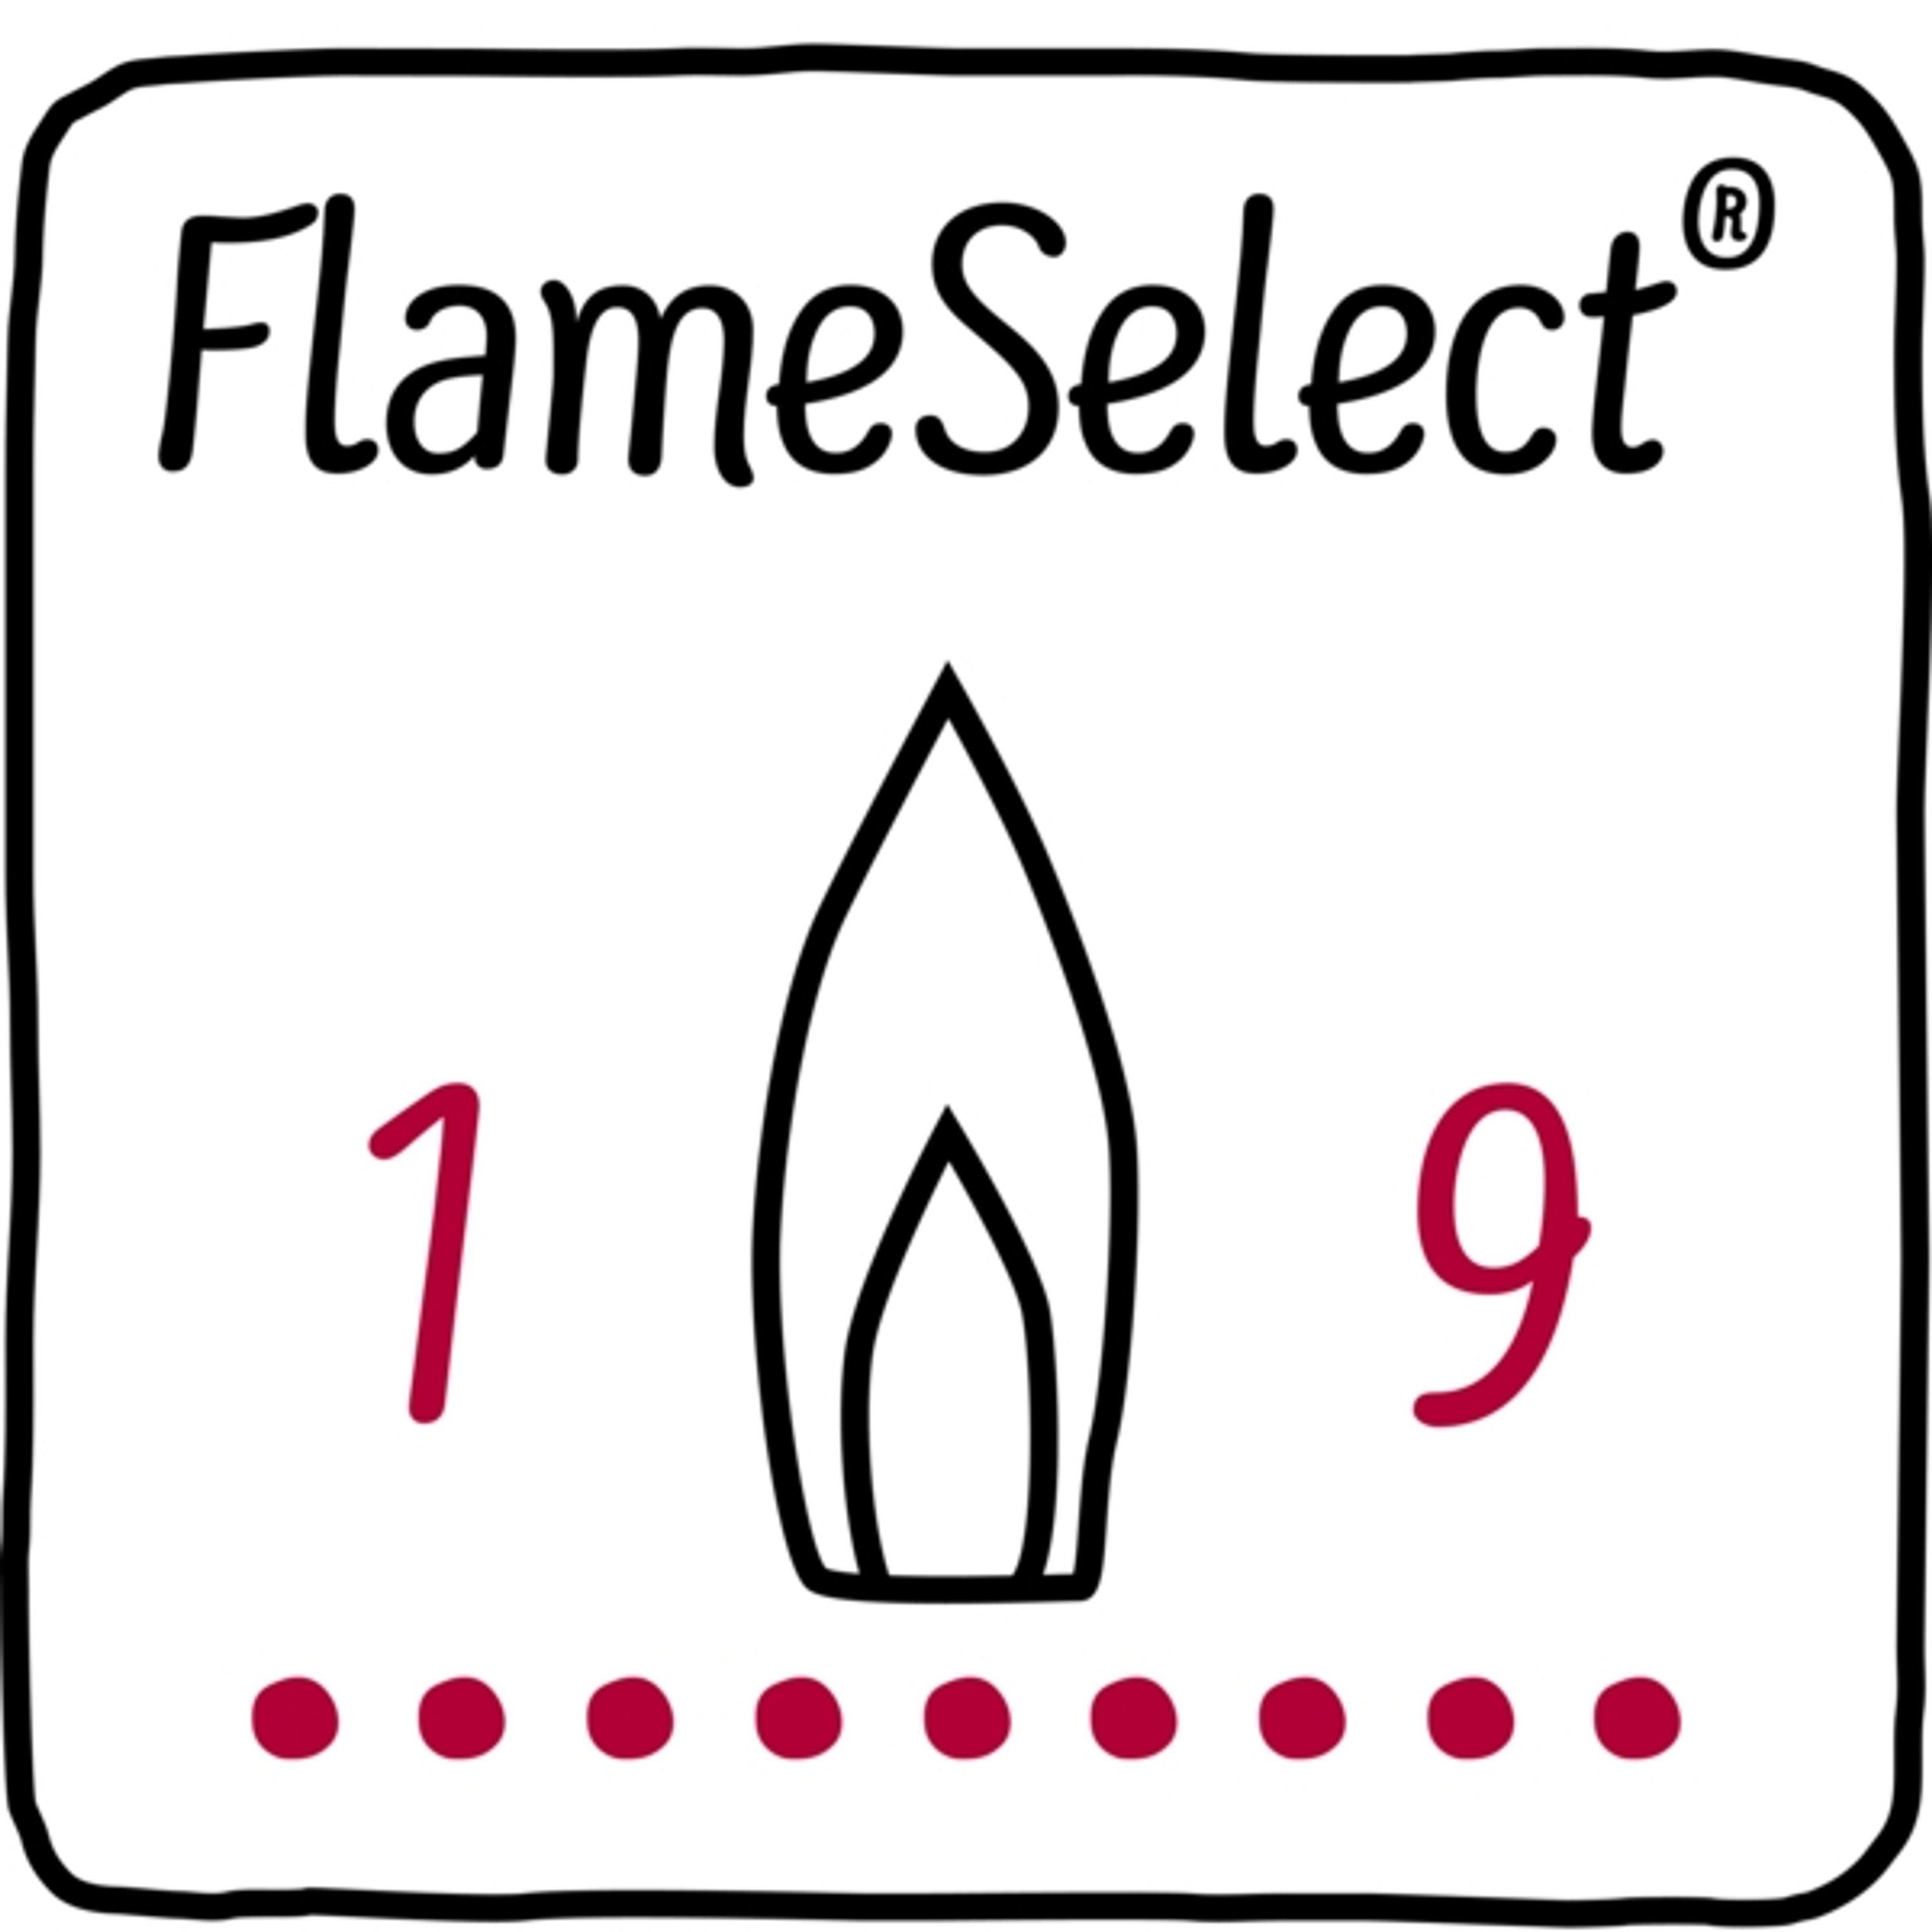 75 NEFF cm 70 Select, Flame Edelstahl, N T27DS79N0, Gas-Kochfeld breit